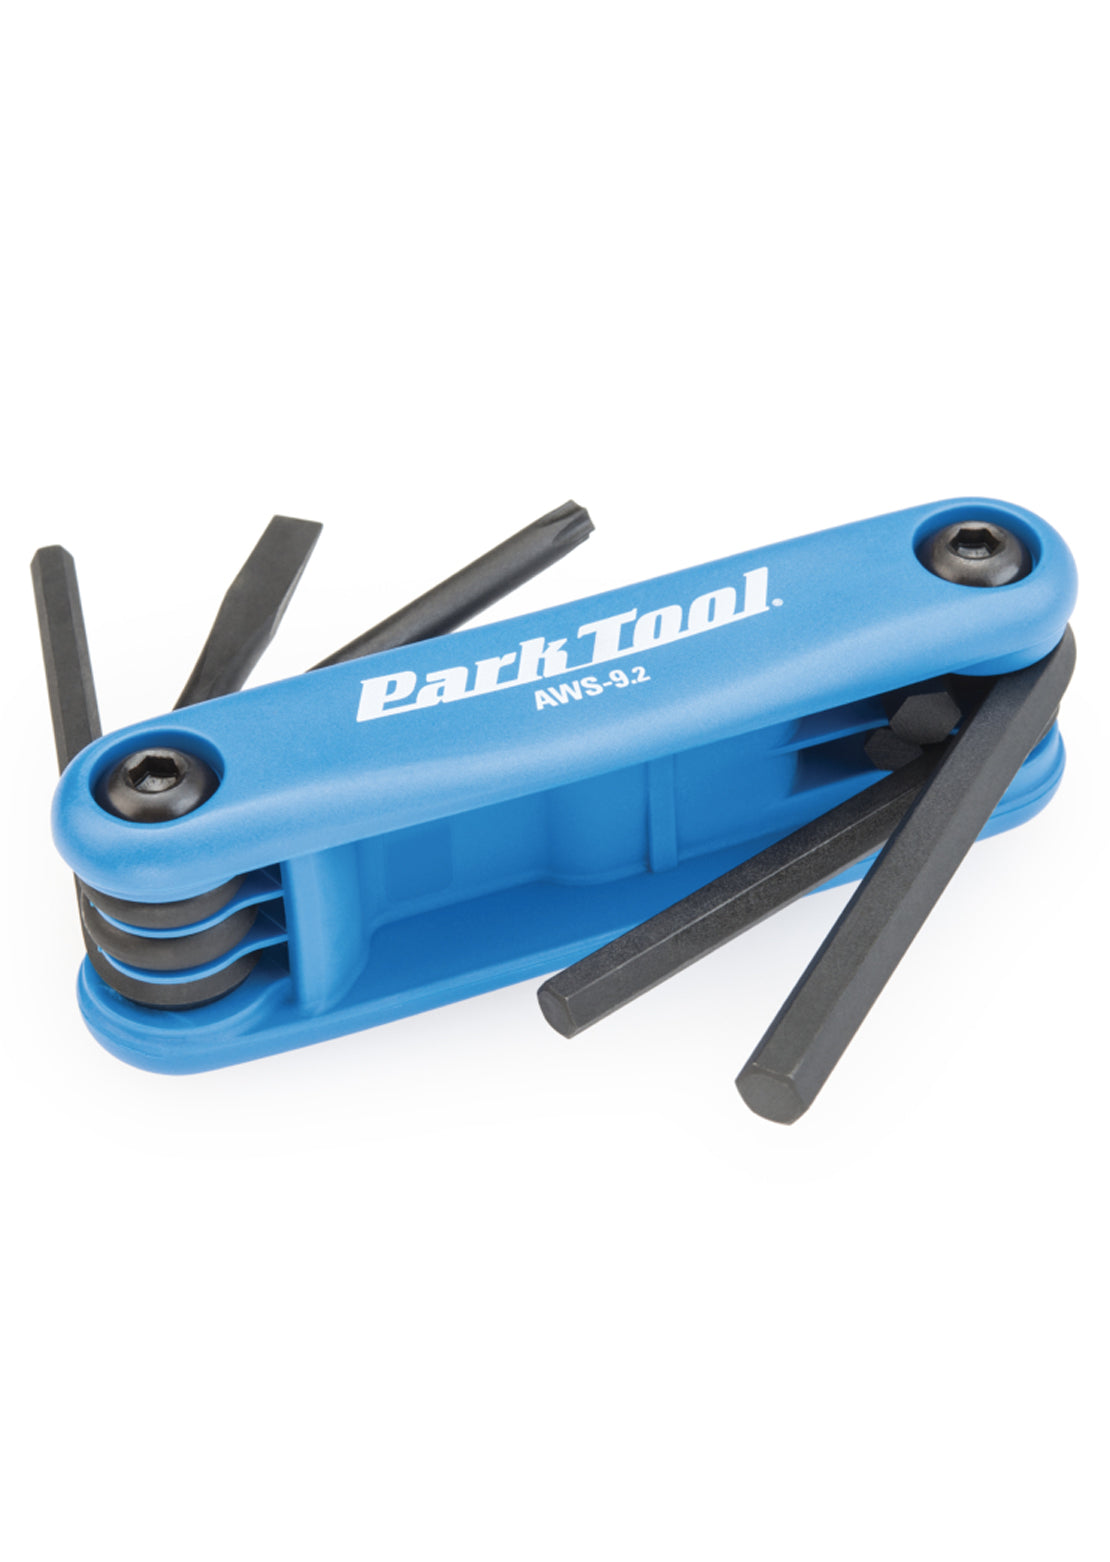 Park Tool AWS-9.2 Folding Hex/Screw Bike Tool Blue